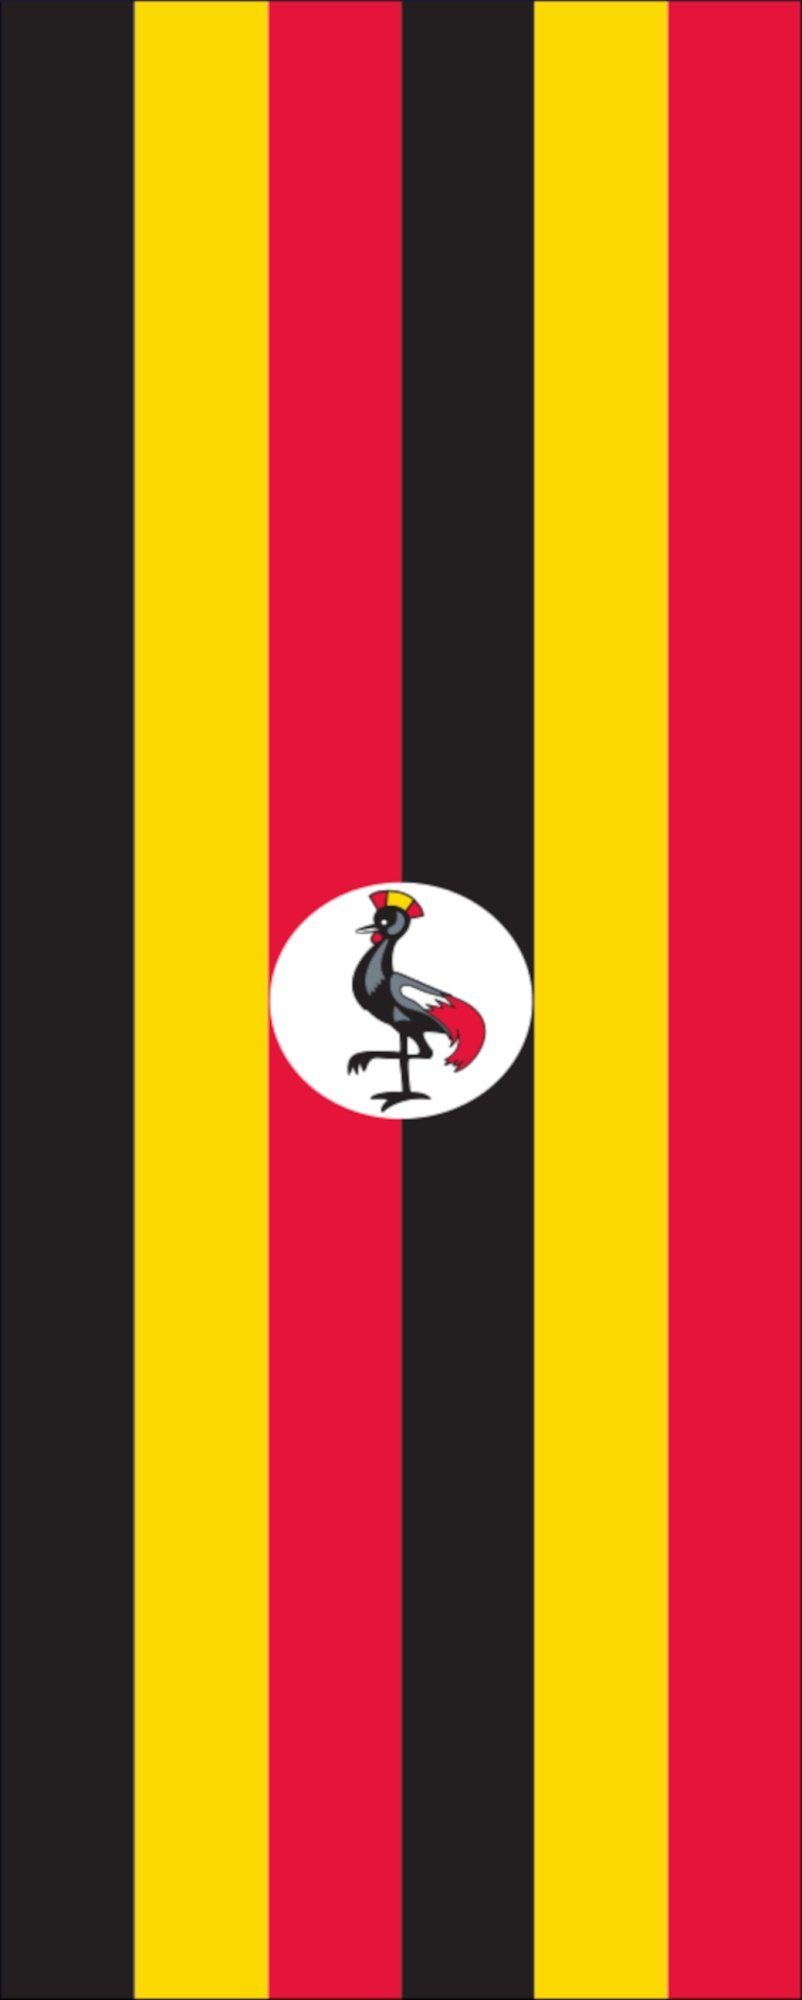 Uganda g/m² Flagge Hochformat 110 flaggenmeer Flagge